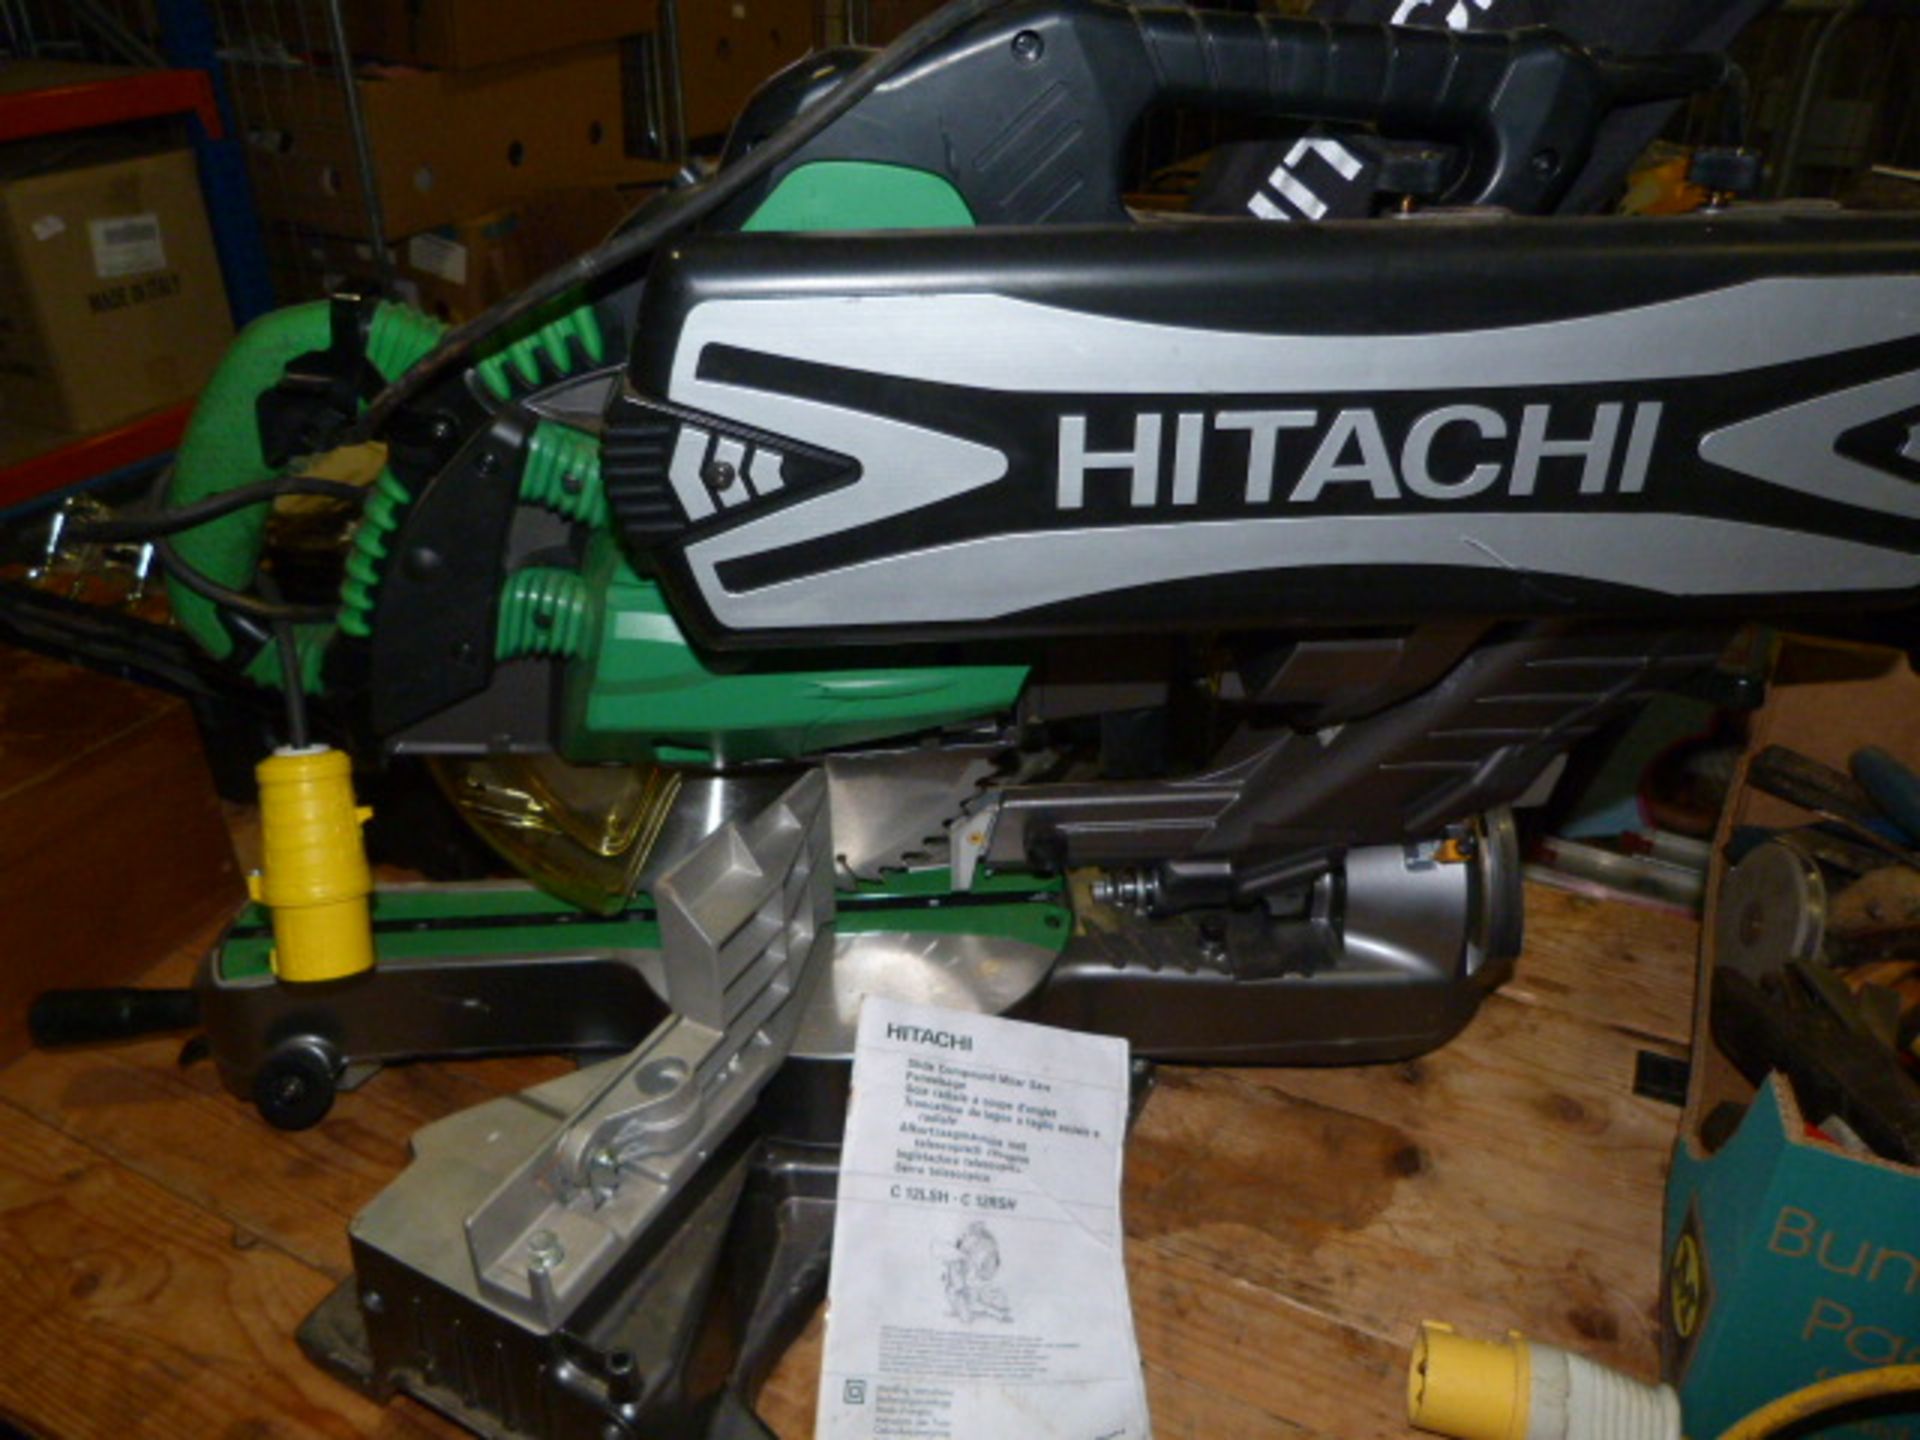 Hitachi C12RSH Compound Mitre Saw 110V